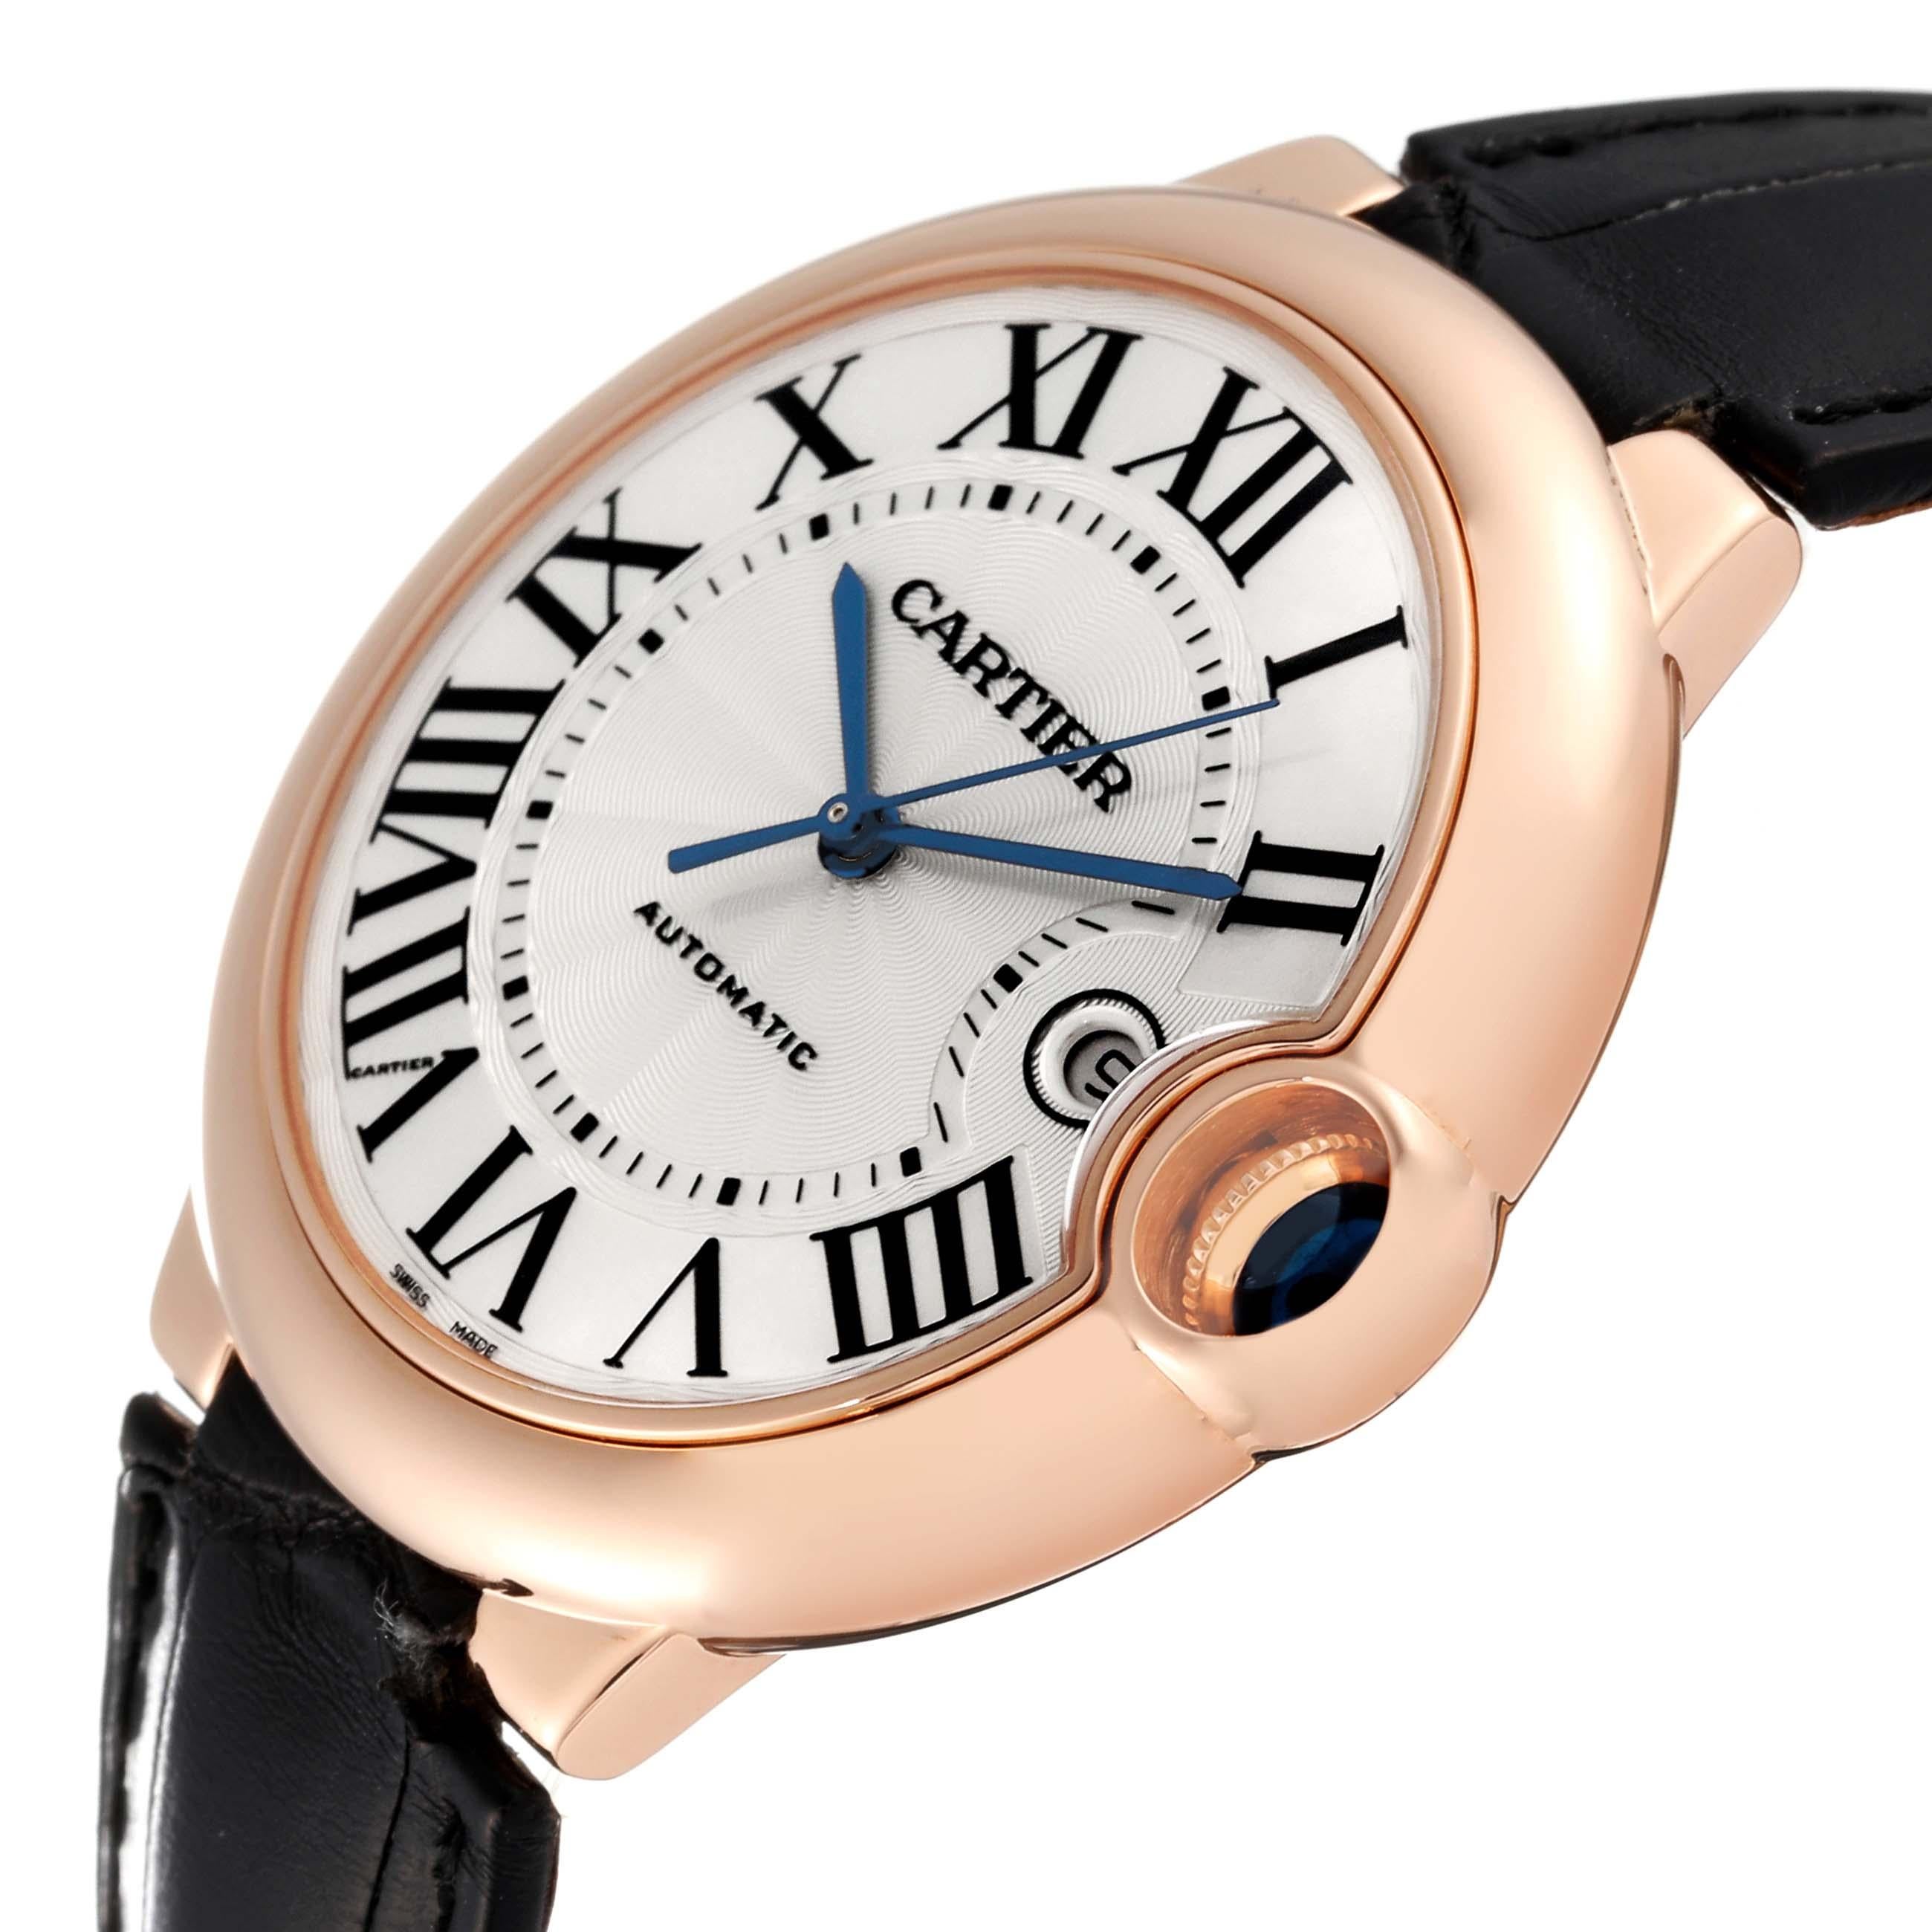 Cartier Ballon Bleu Rose Gold Automatic Mens Watch W6900651 For Sale 1